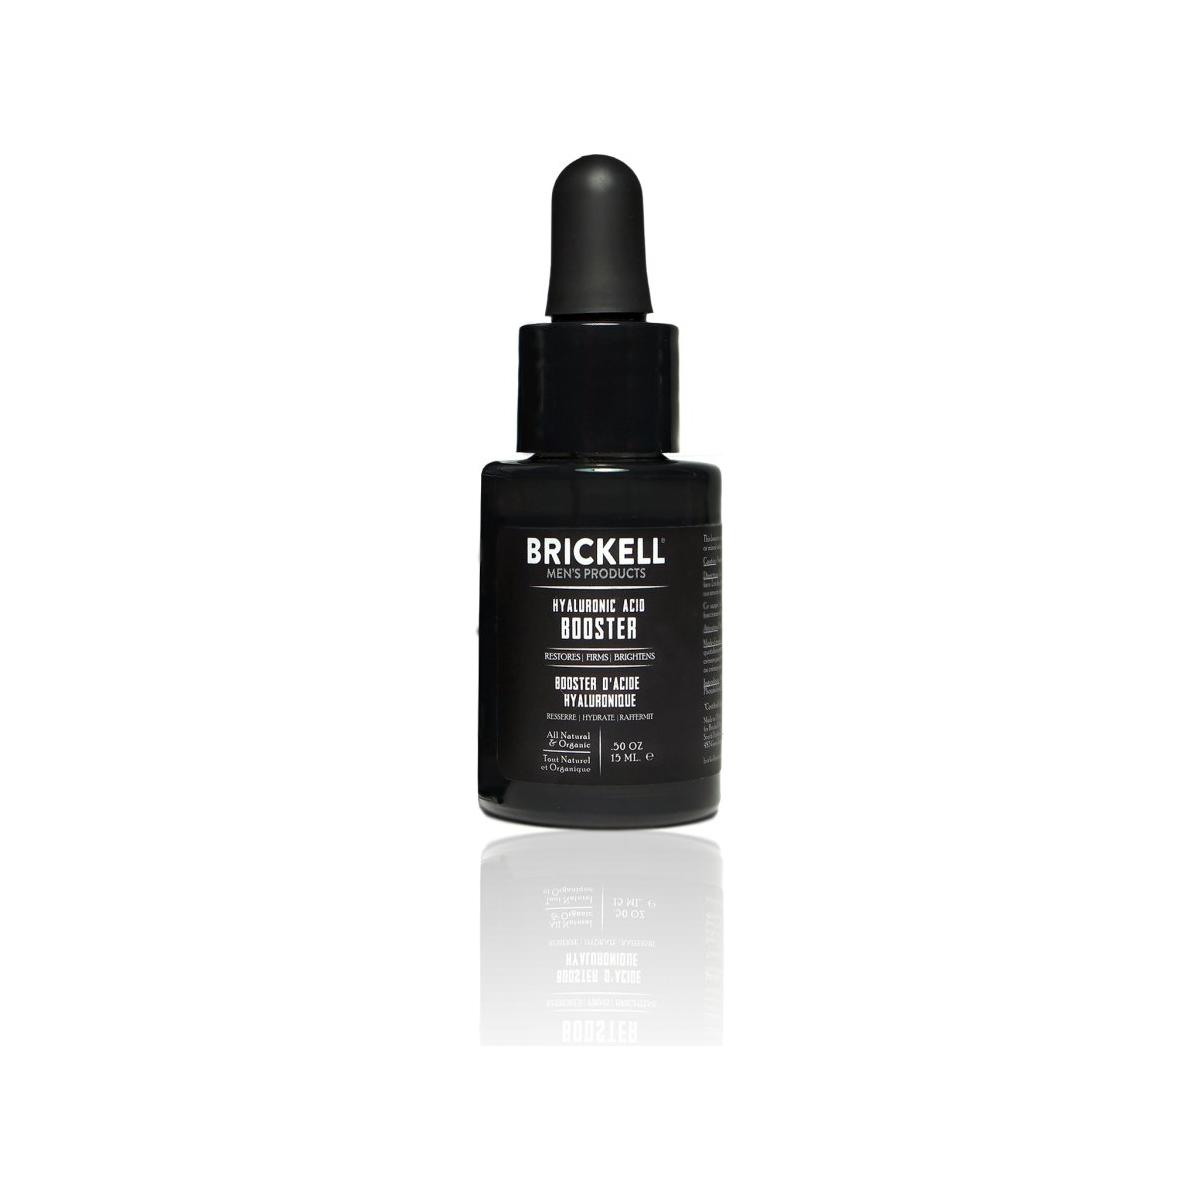 Brickell Hyaluronic Acid Booster - 15ml - Glam Global UK